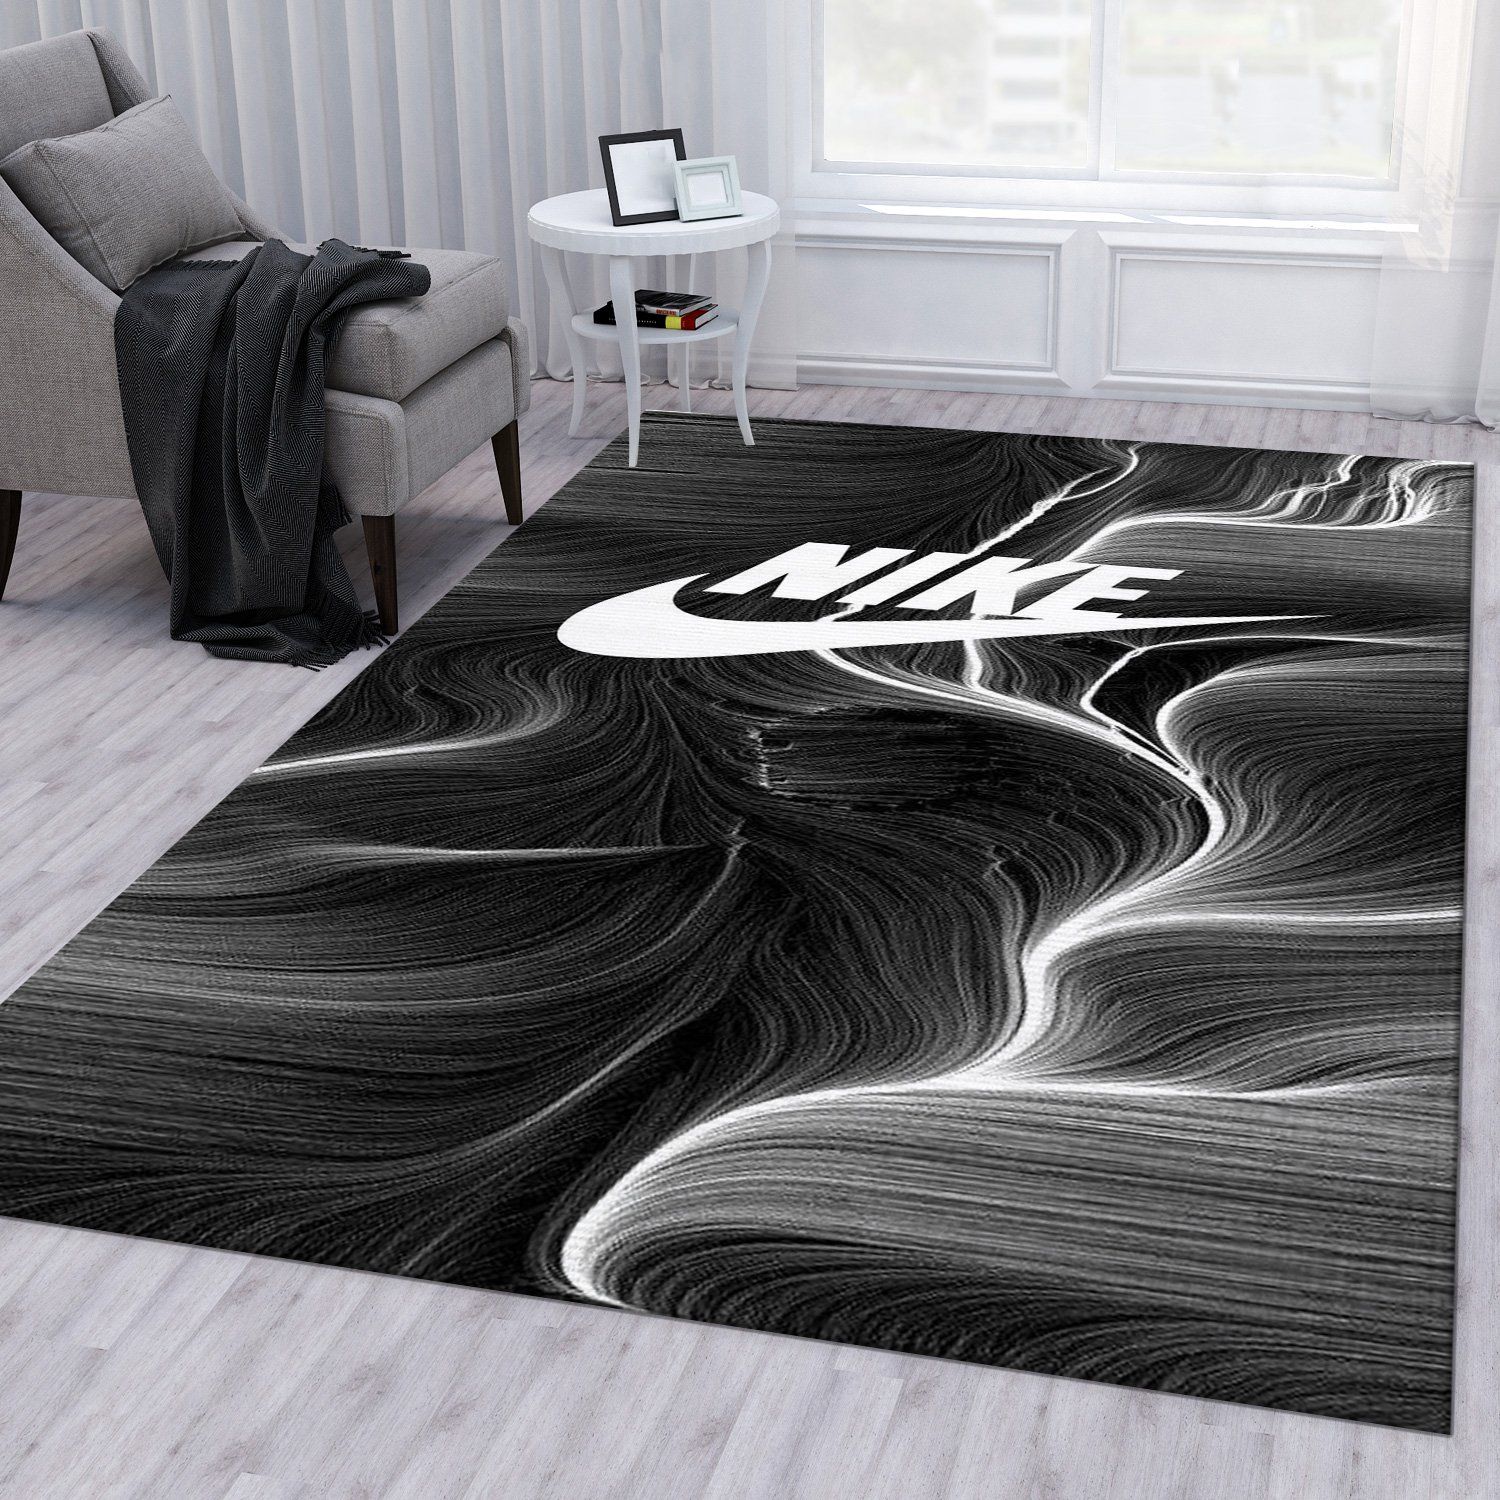 nike floor mat